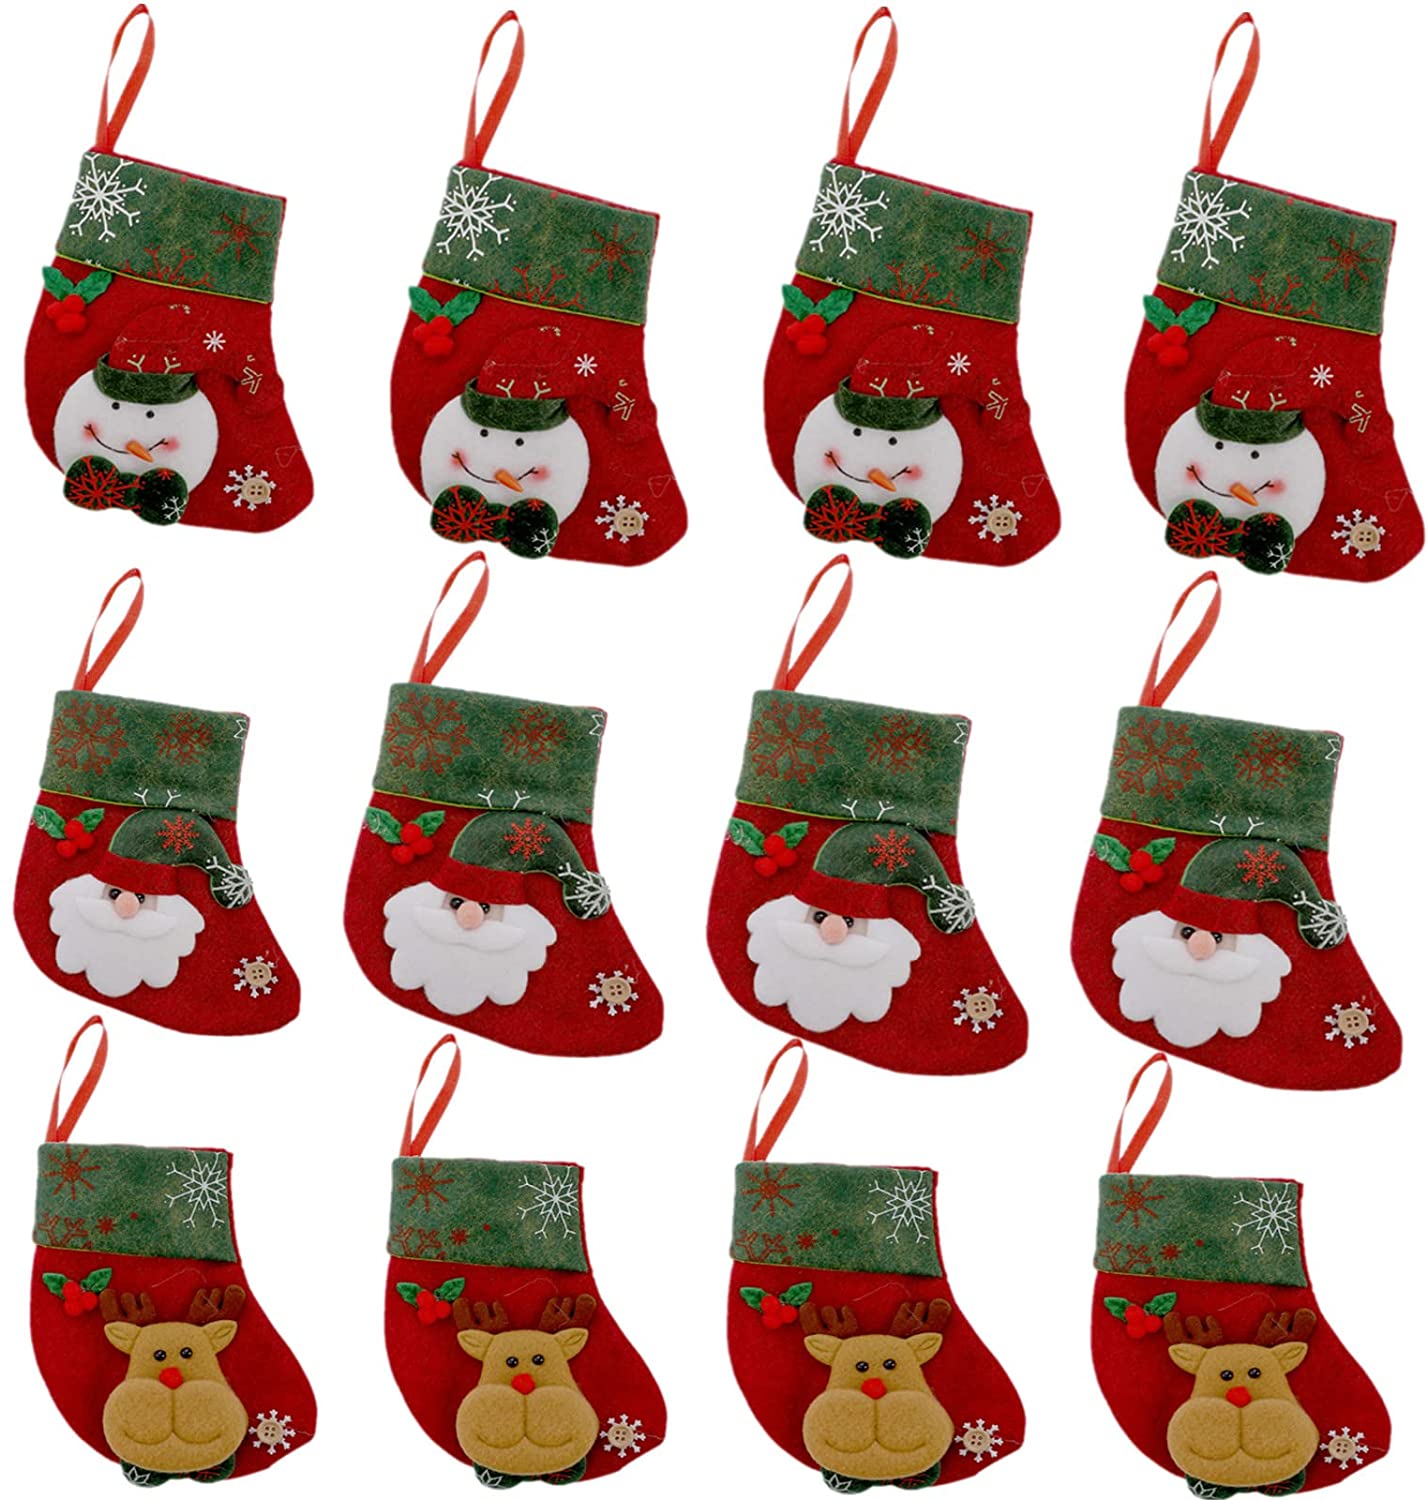 NEW Christmas Mini Rain Deer Stockings Holiday Decorations Felt Stocking 